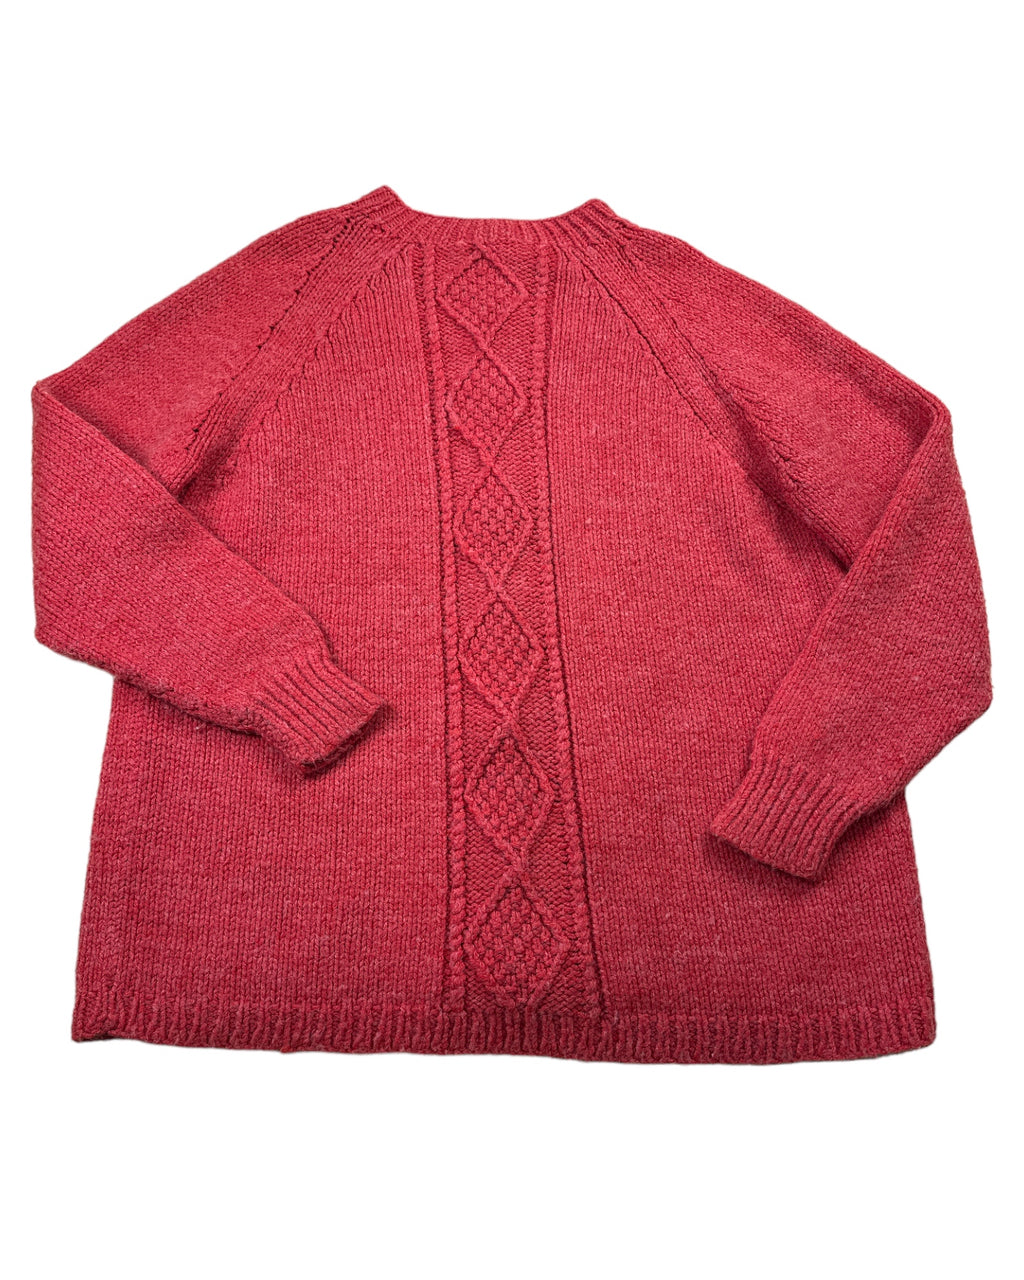 Orange 50s/60s Sweater, L